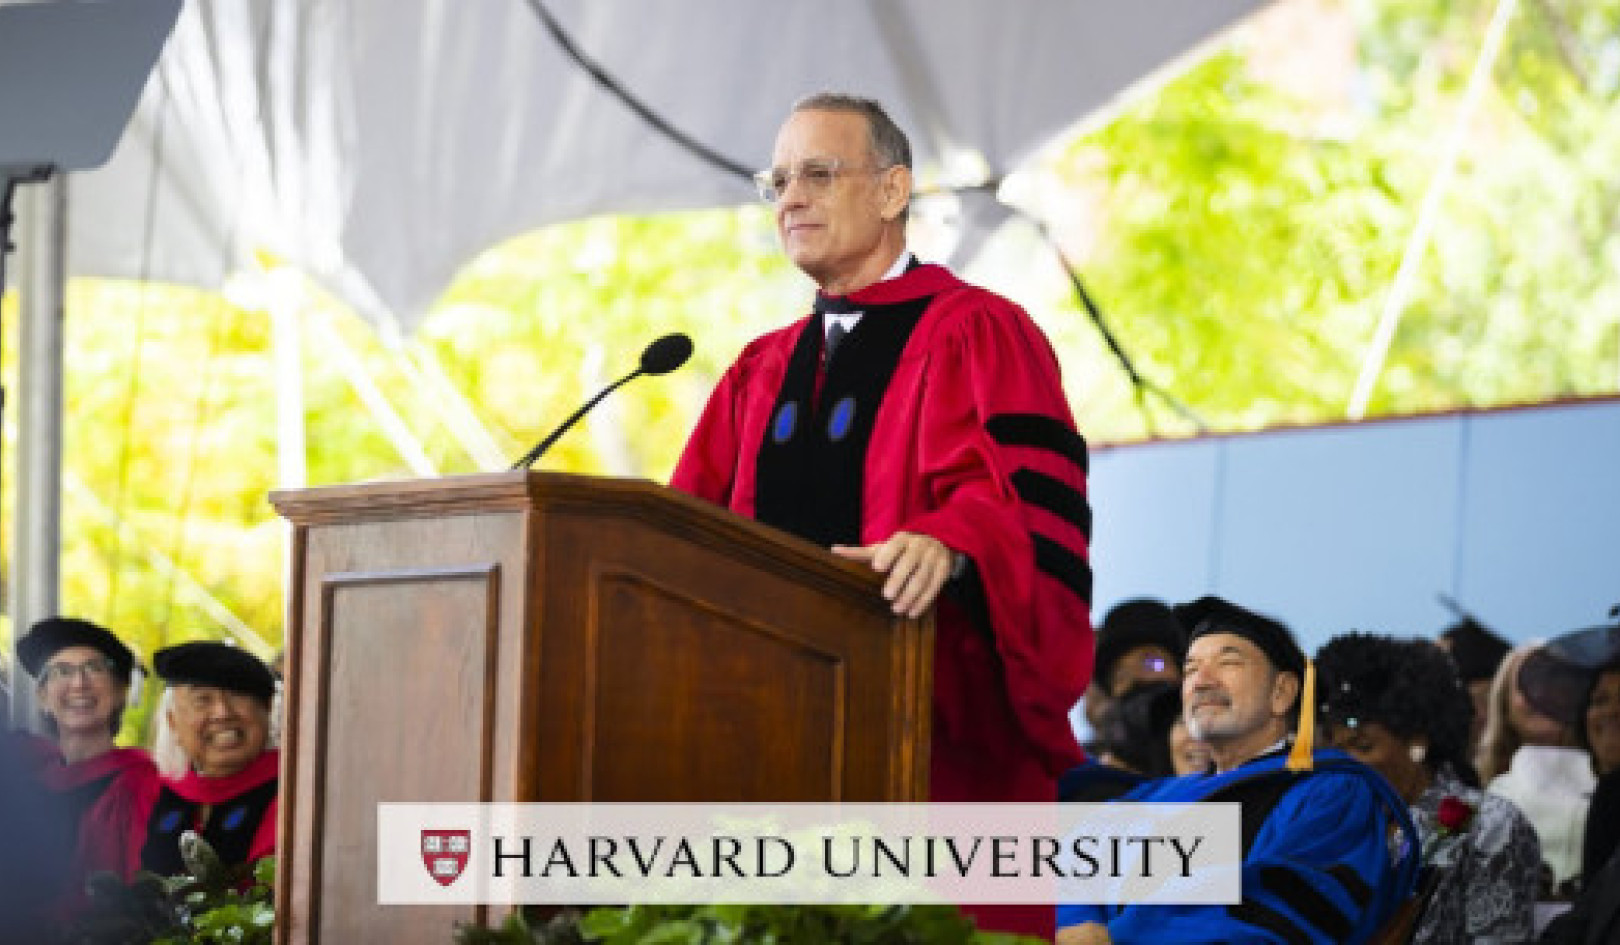 Tom Hanks Menginspirasi Lulusan Harvard untuk Merangkul Kebenaran, Keadilan, dan Cara Amerika